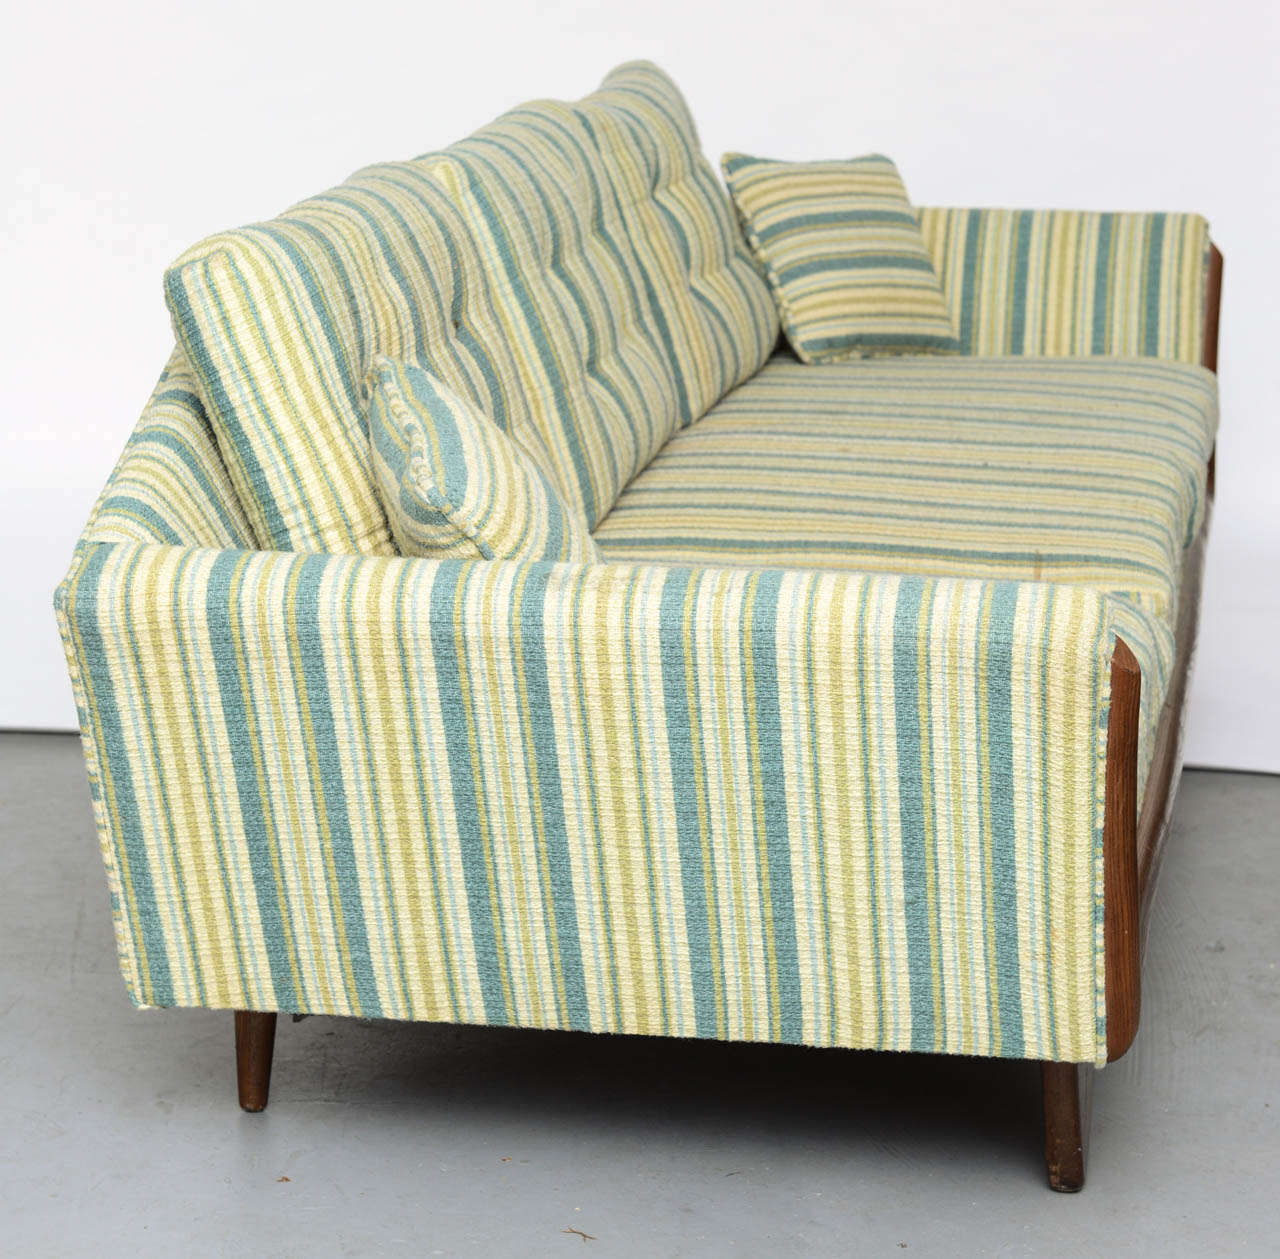 Fabric Adrian Pearsall Boomerang Sofa w/ Walnut Trim- Original Striped Upholstery 1960